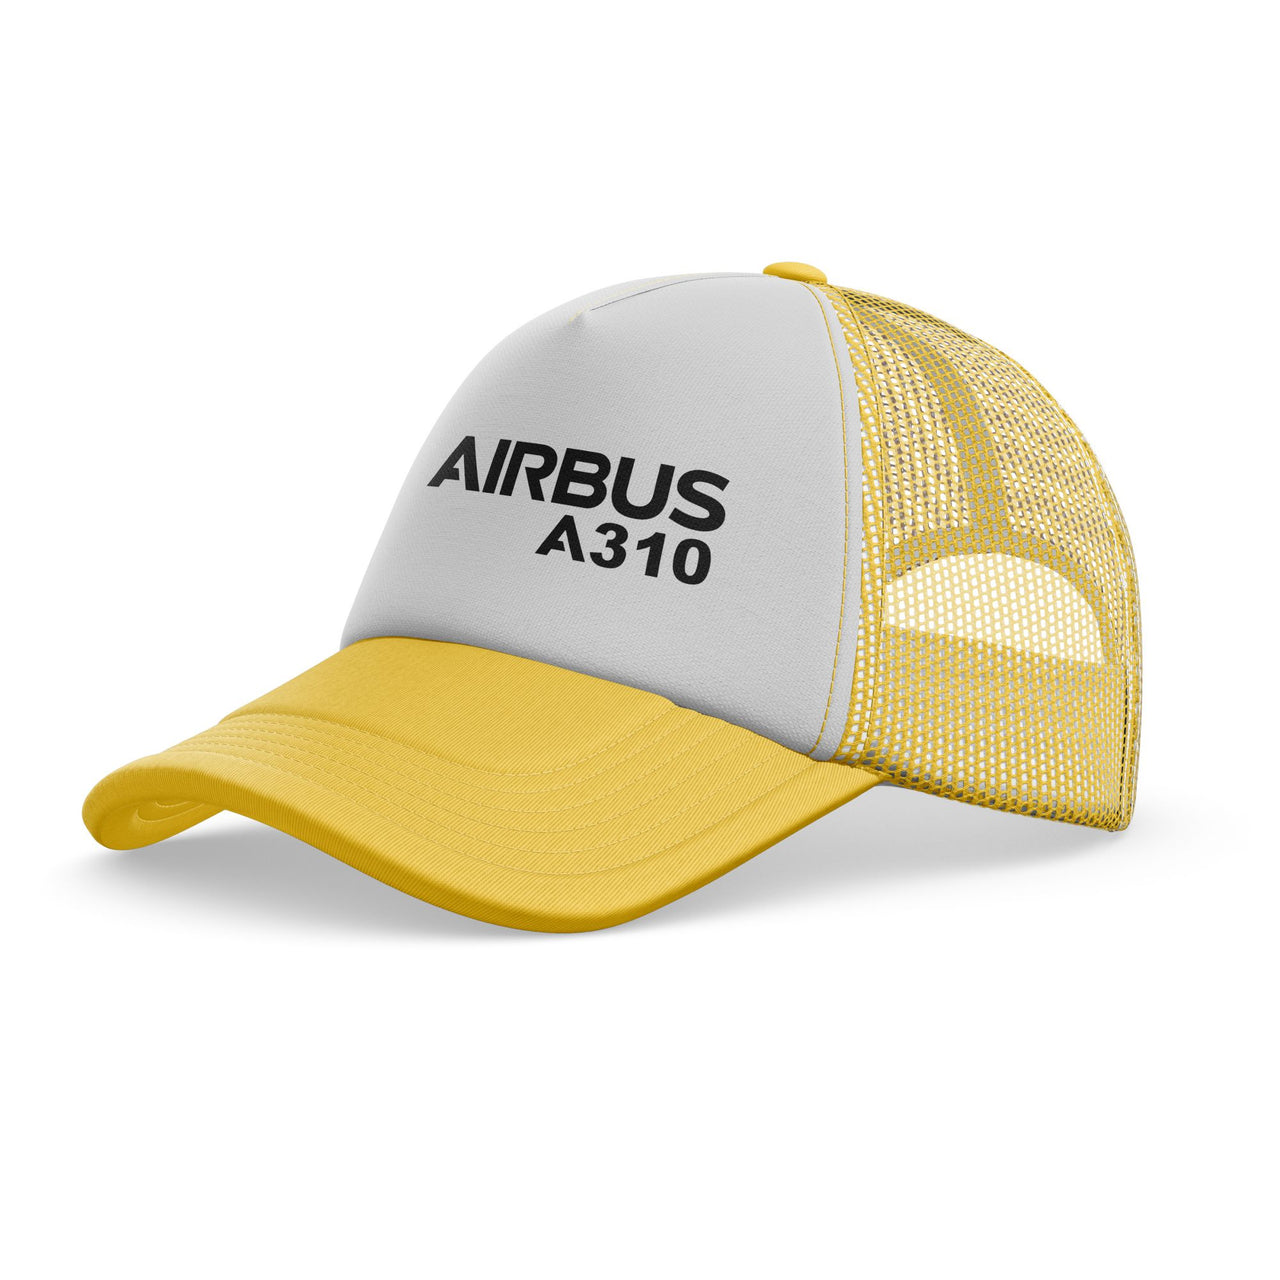 Airbus A310 & Text Designed Trucker Caps & Hats